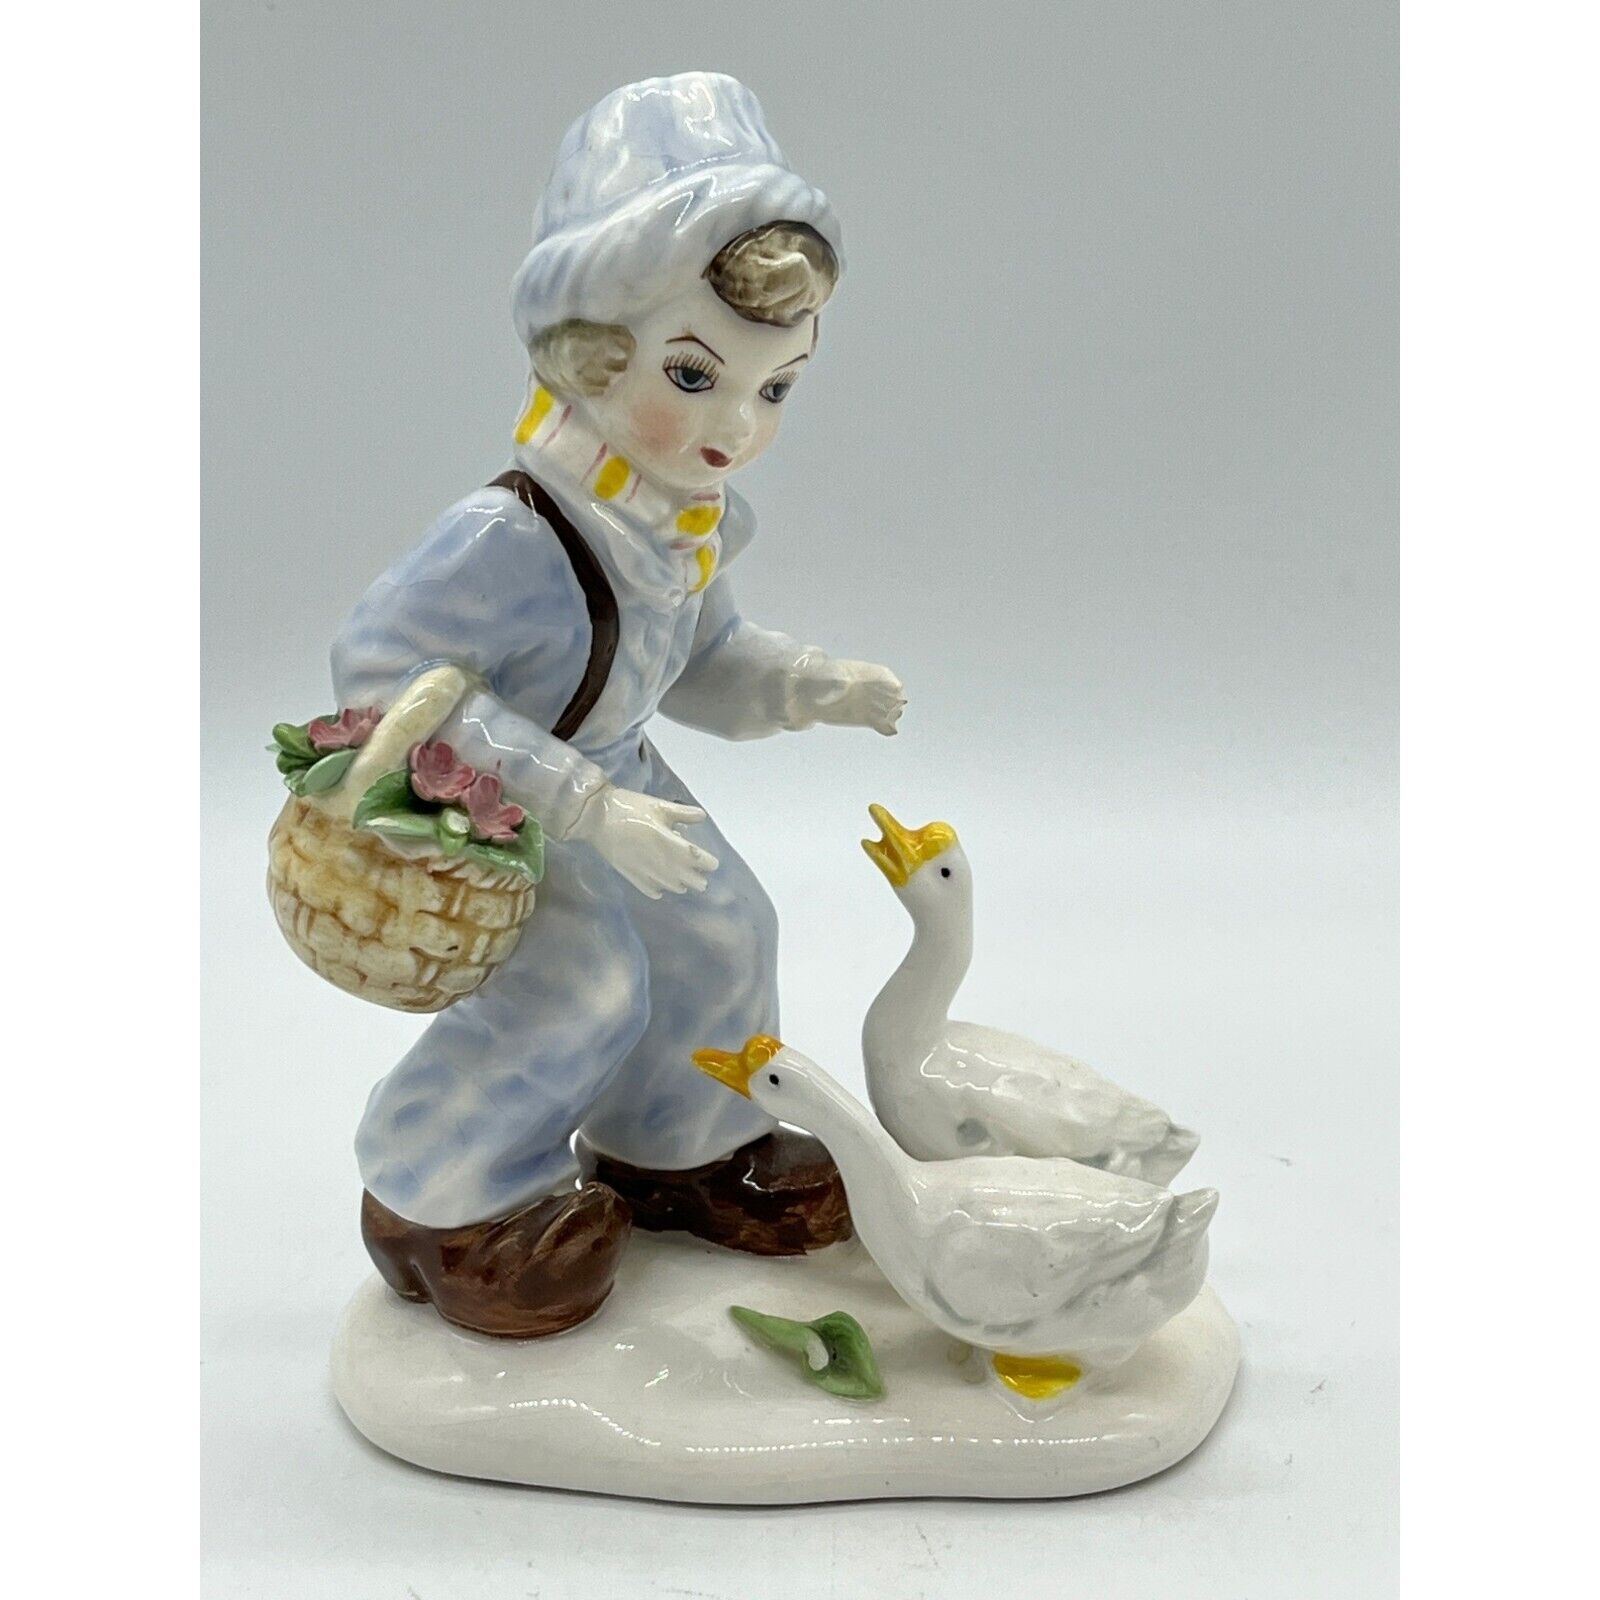 Vintage Ceramic Dutch Boy Figurine with Geese Made in Japan Original Arnart Crea